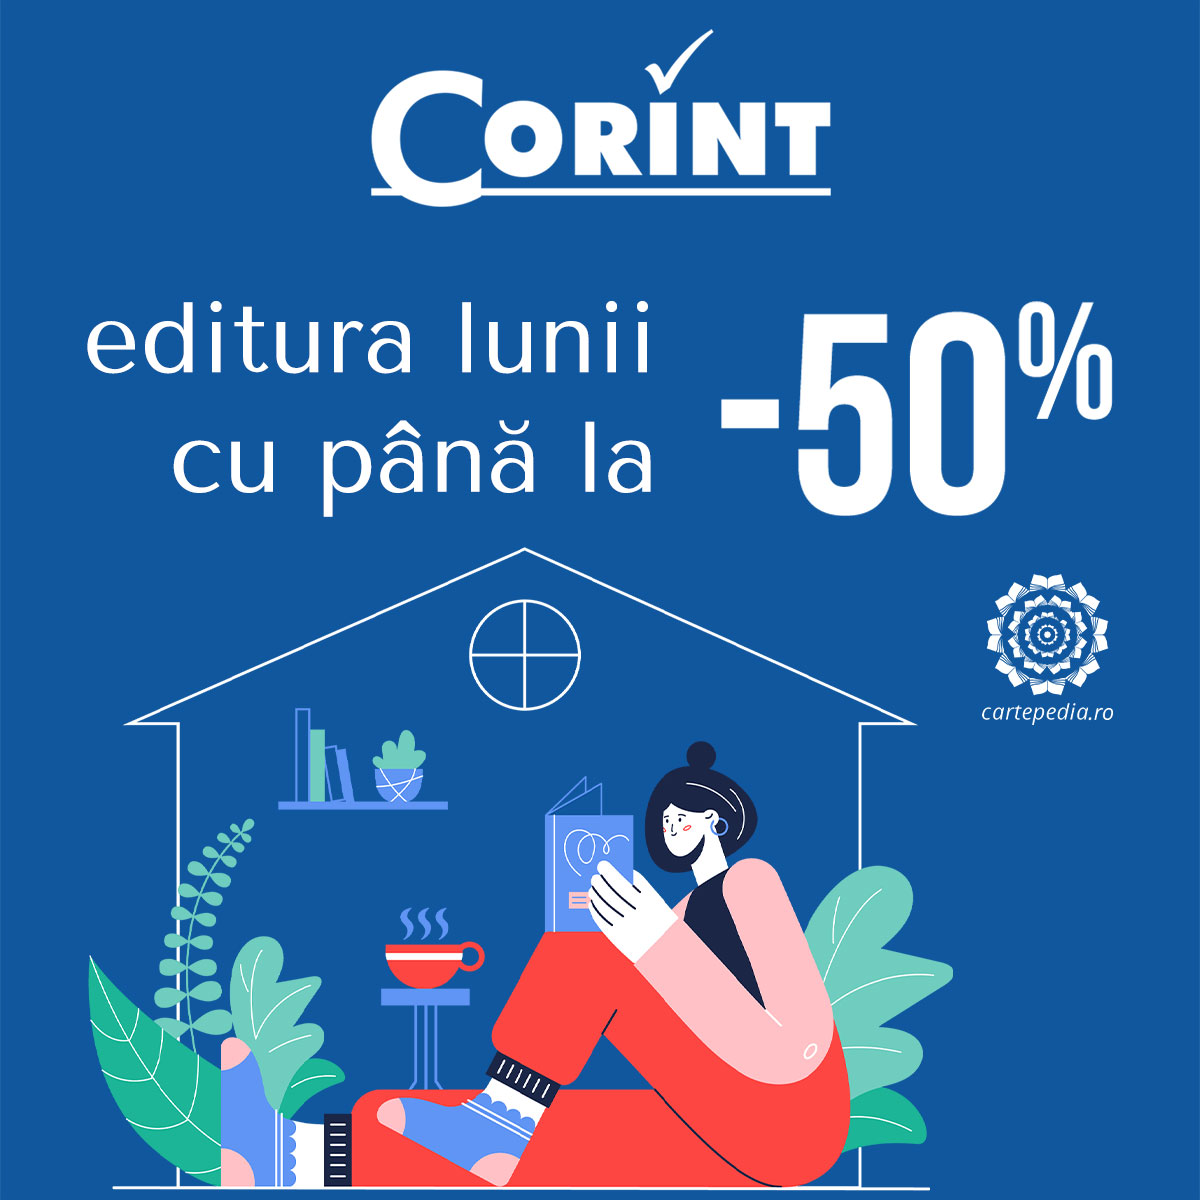 Corint - Editura lunii ianuarie